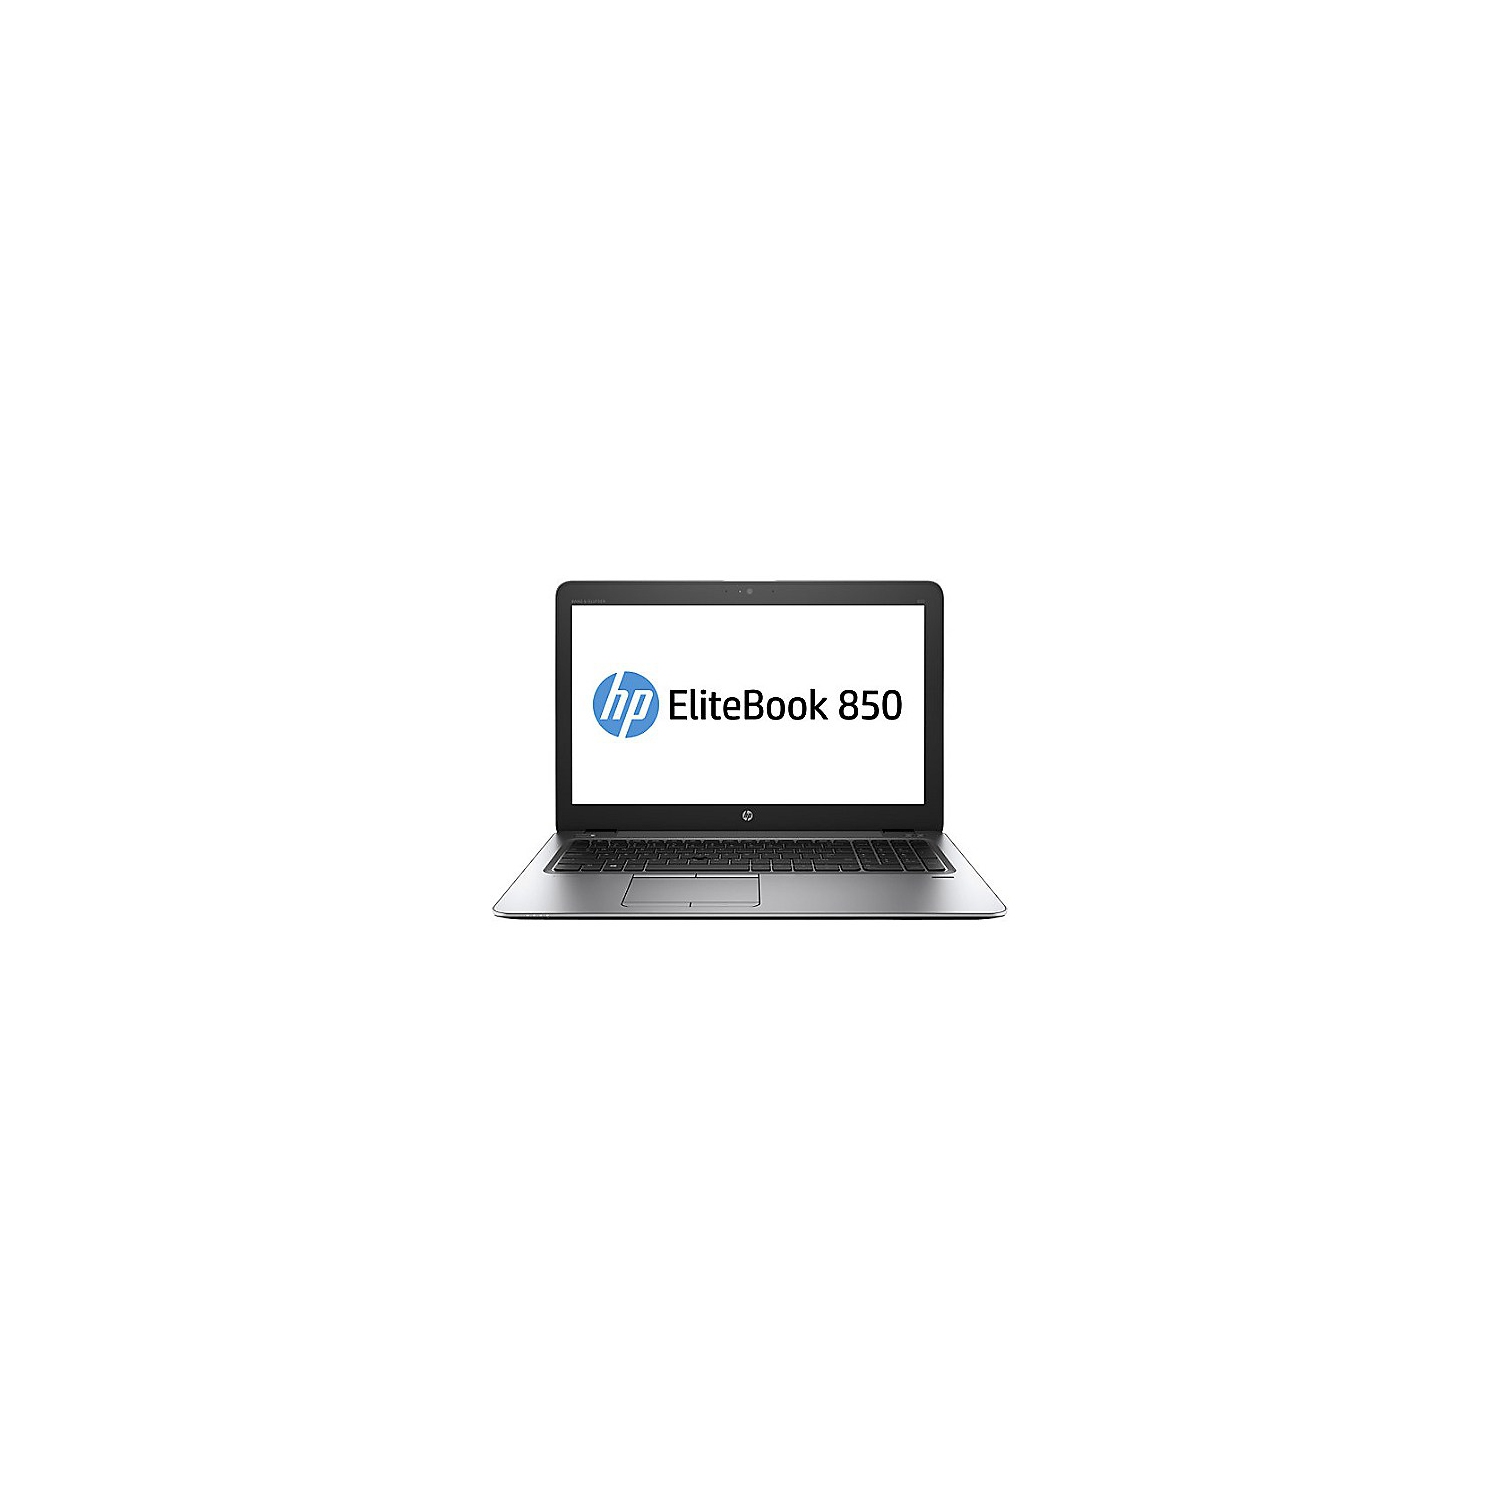 HP EliteBook 850 G3 15.6" Laptop (Intel Core i5 6th Gen, 16GB RAM, 256GB SSD, Windows 10 Pro) Refurbished